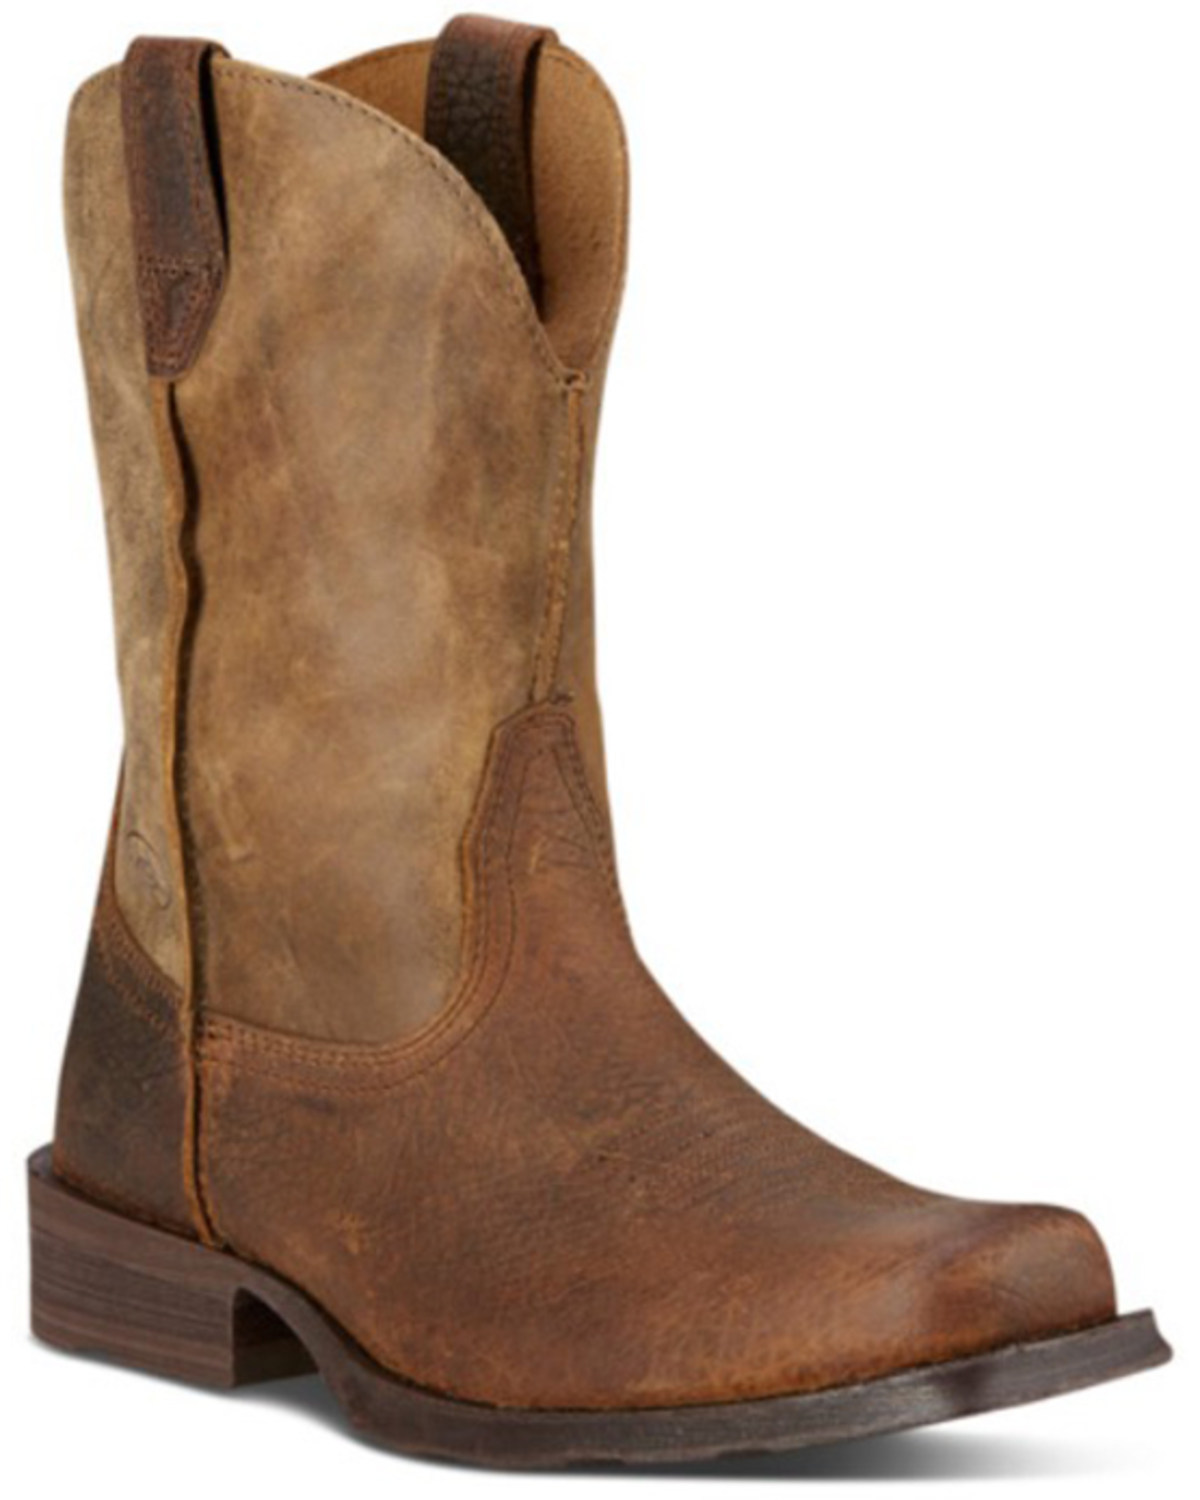 ARIAT Men's Rambler Wide Square Toe - most comfortable cowboy boots for men